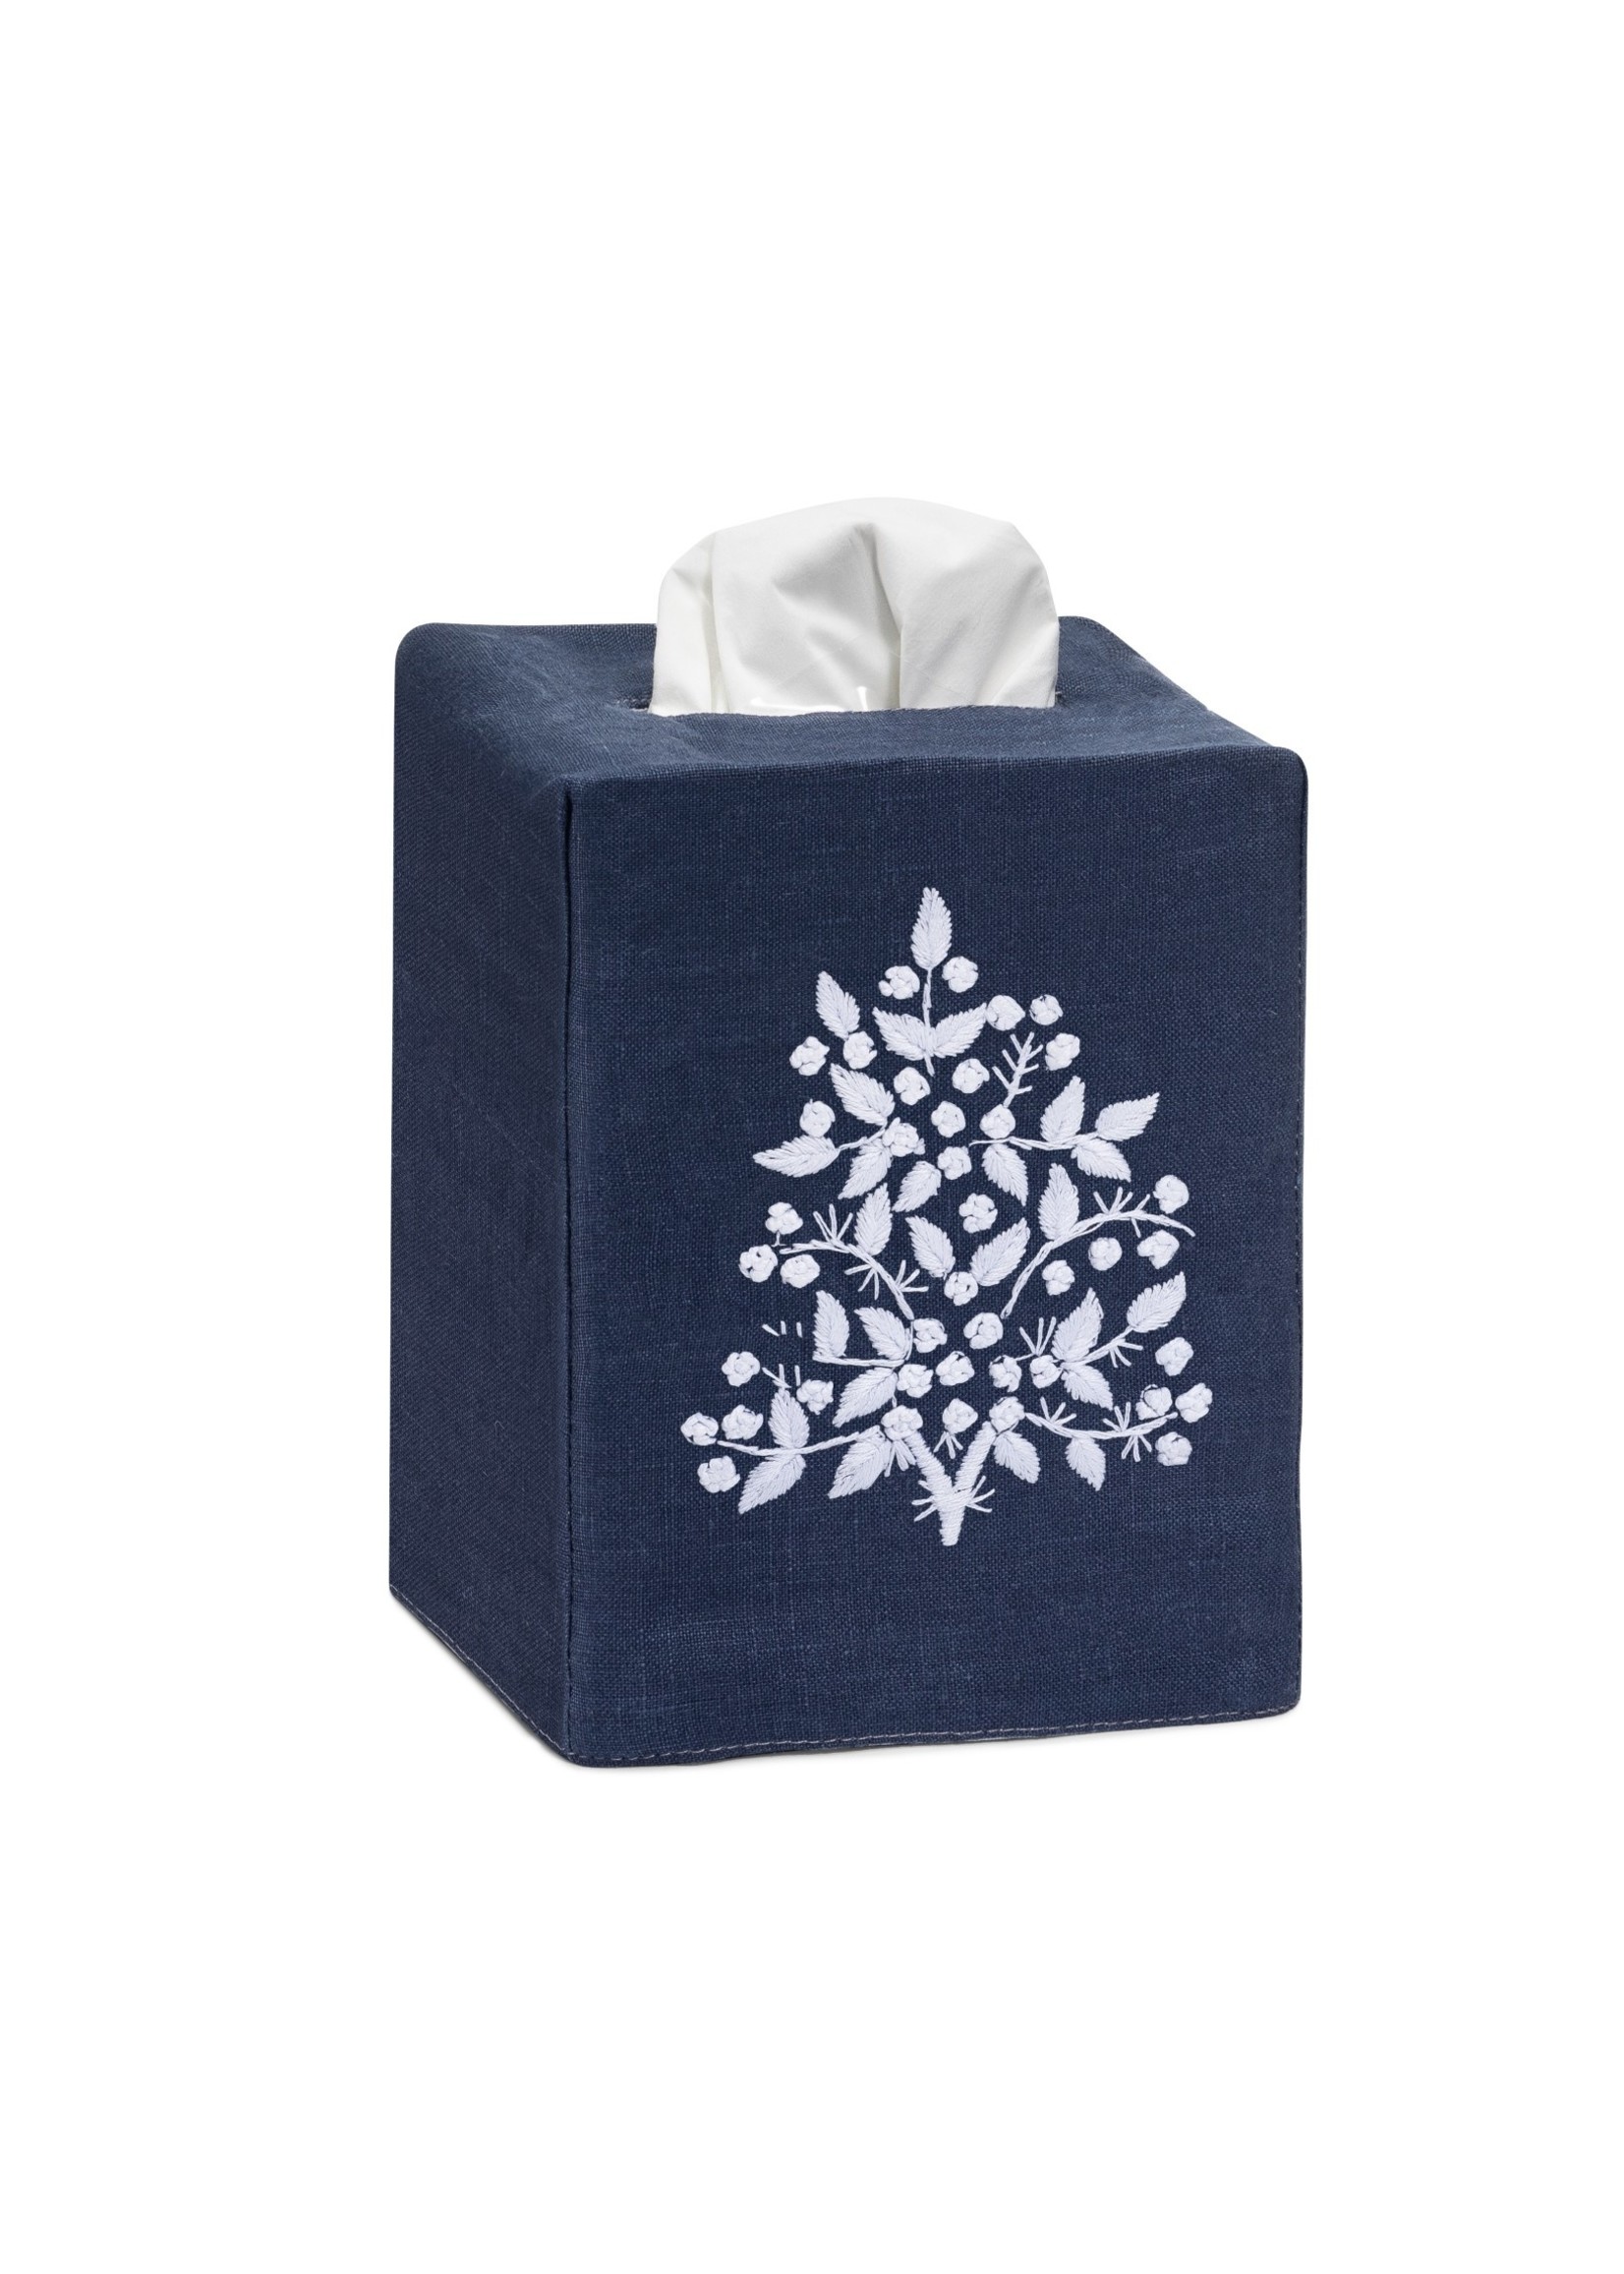 Henry Handwork Tissue Box Cover - Jardin Navy with White